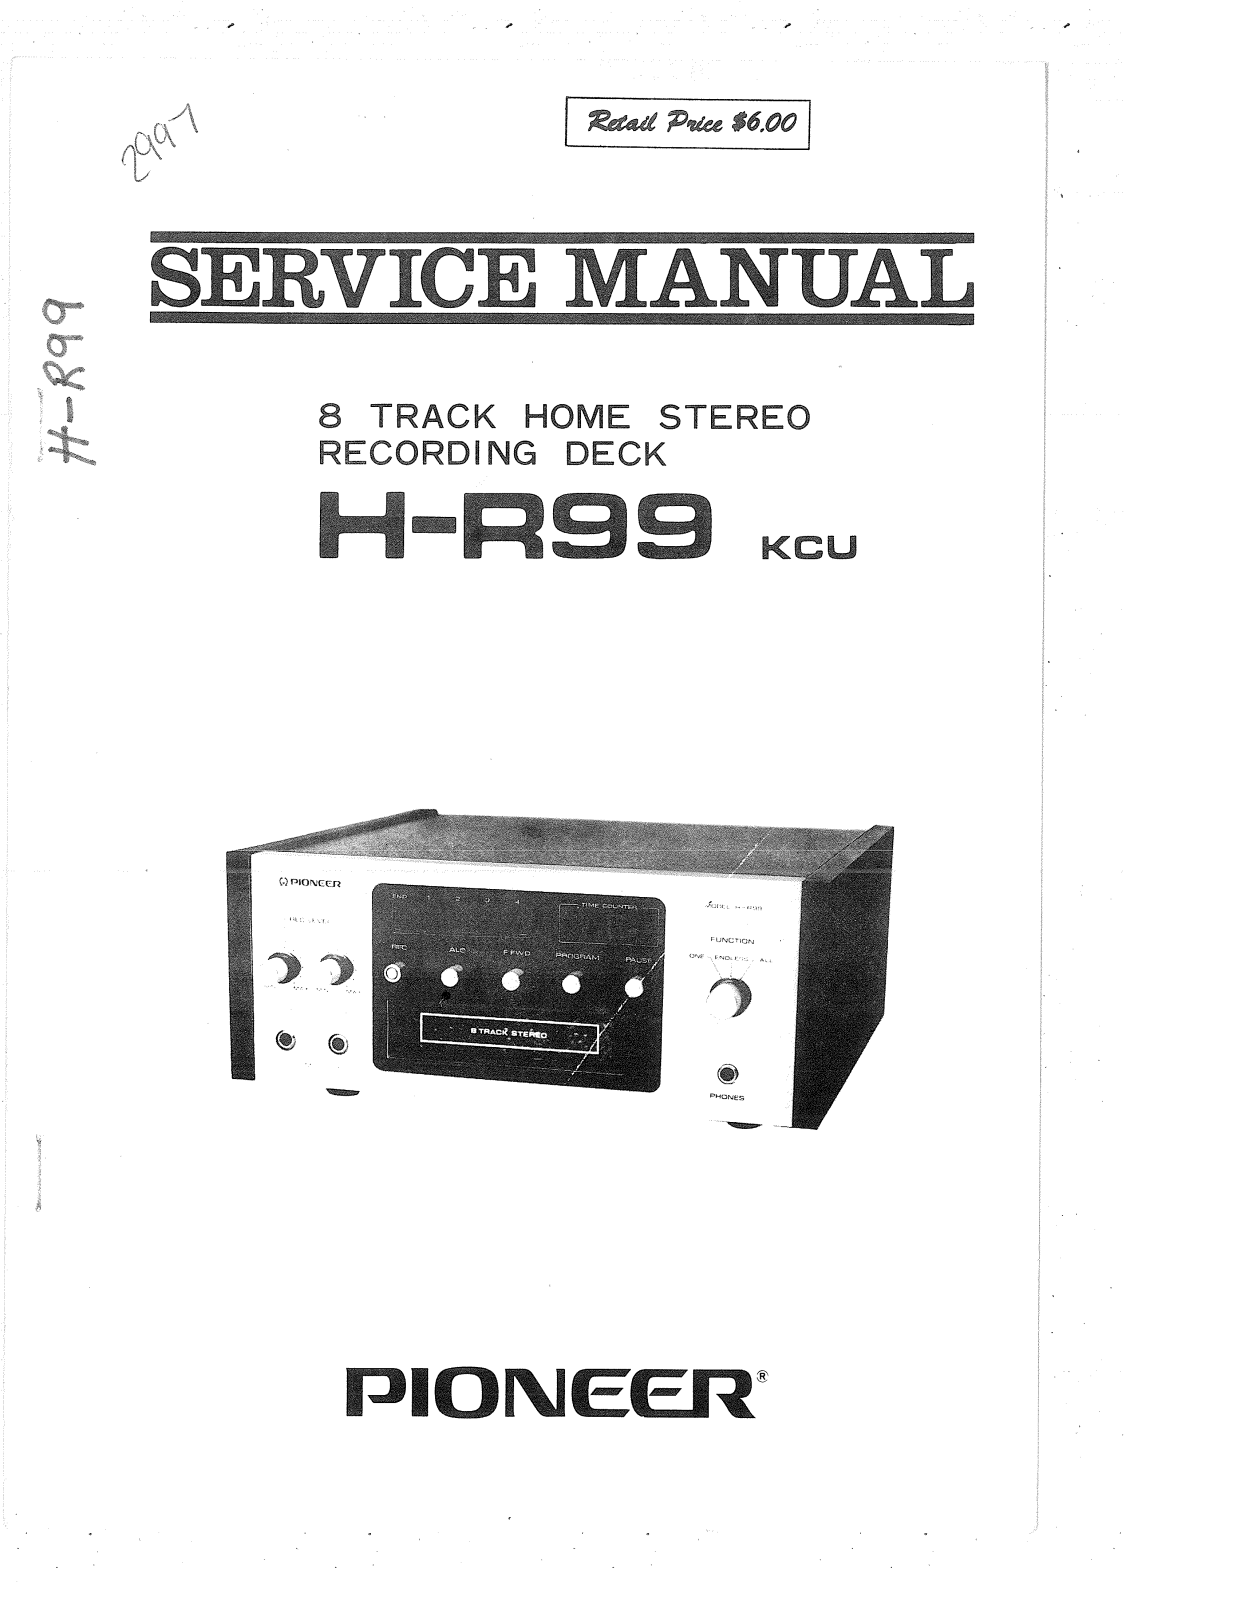 Pioneer H-R99 Service Manual